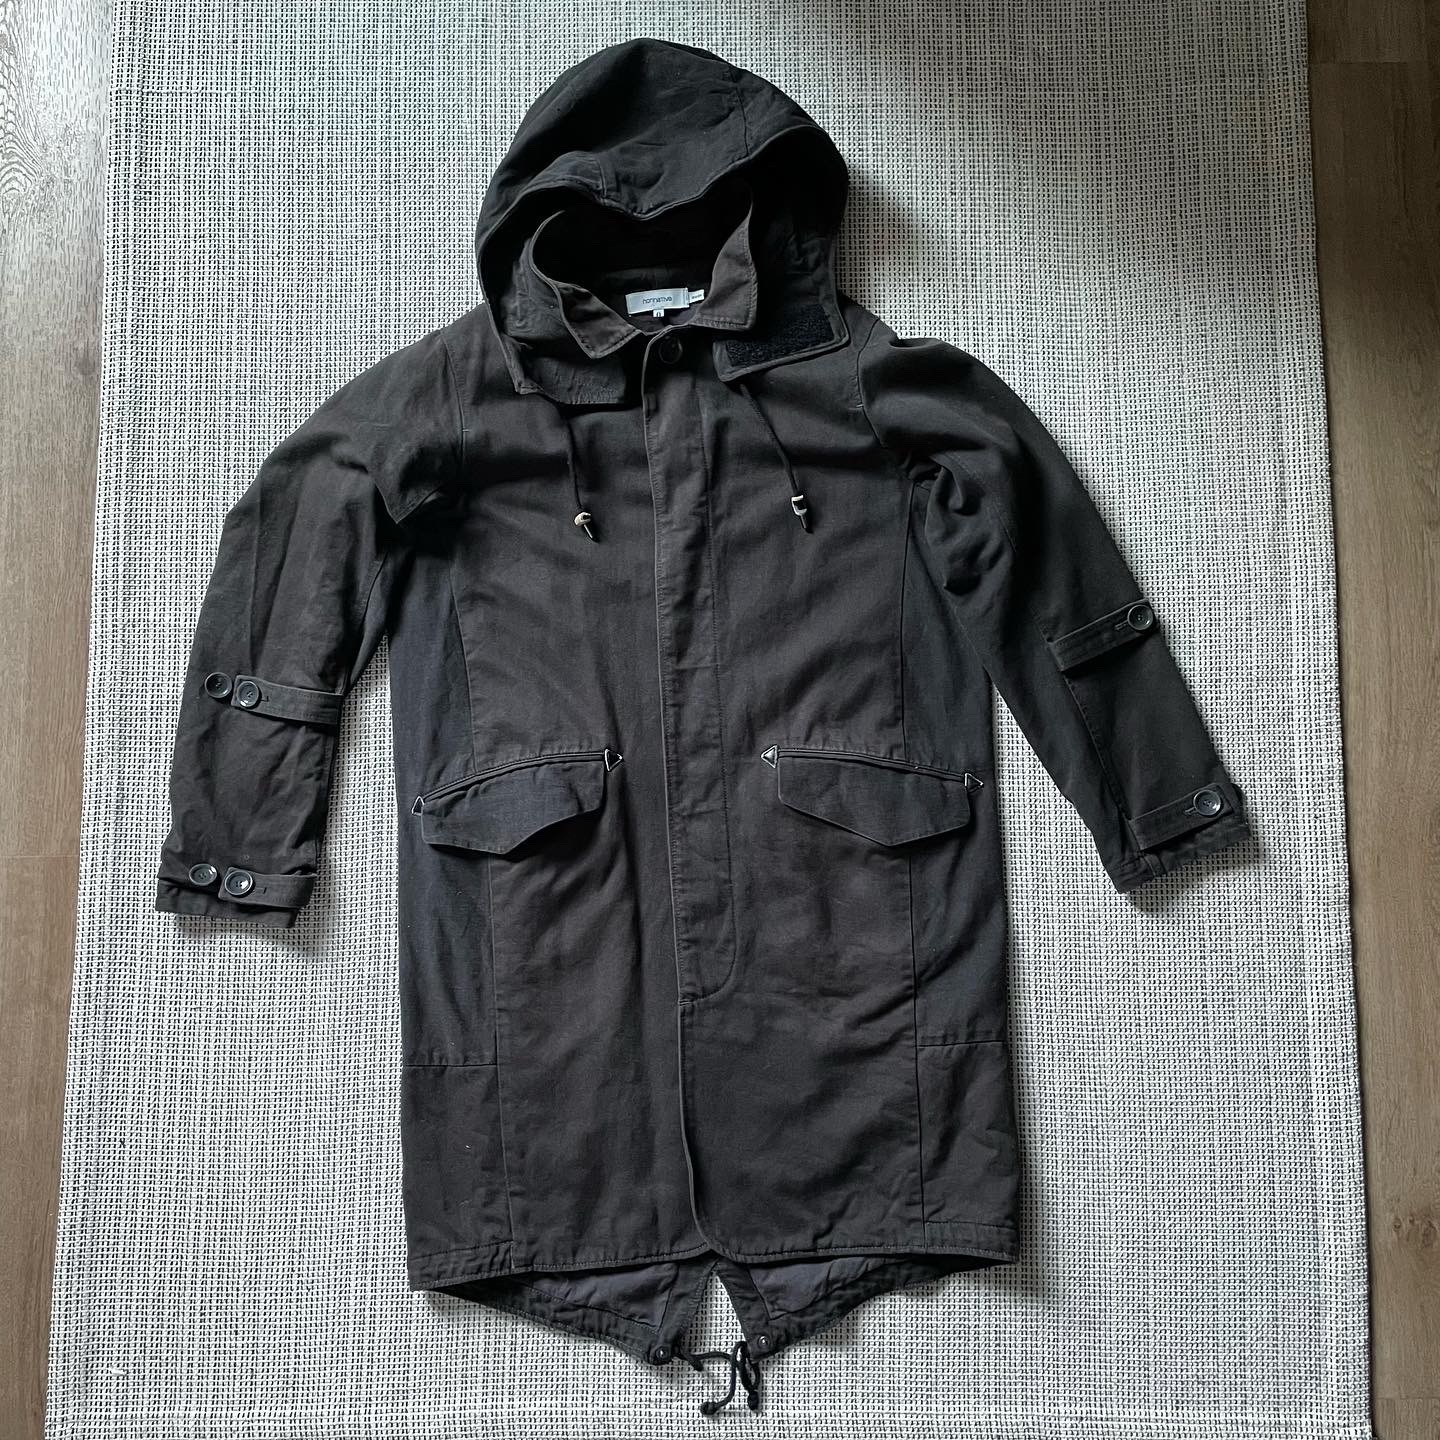 AW11 wanderer coat chino cloth charcoal grey cotton tencel - 1